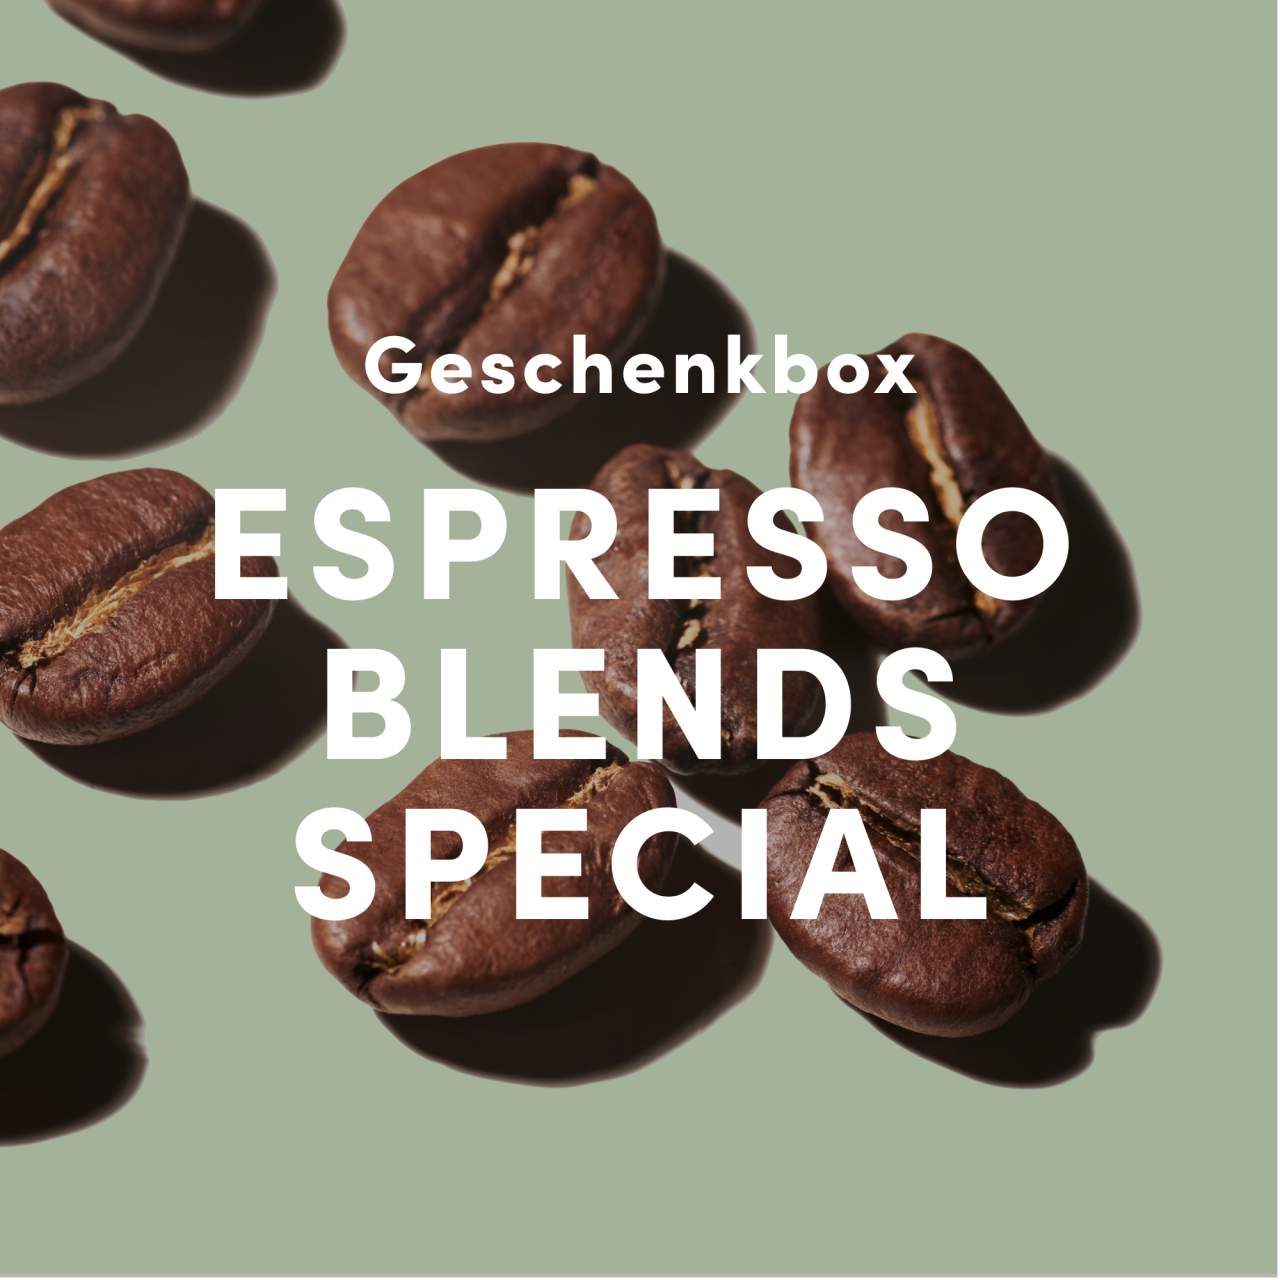 Geschenkbox Espresso Blends Special